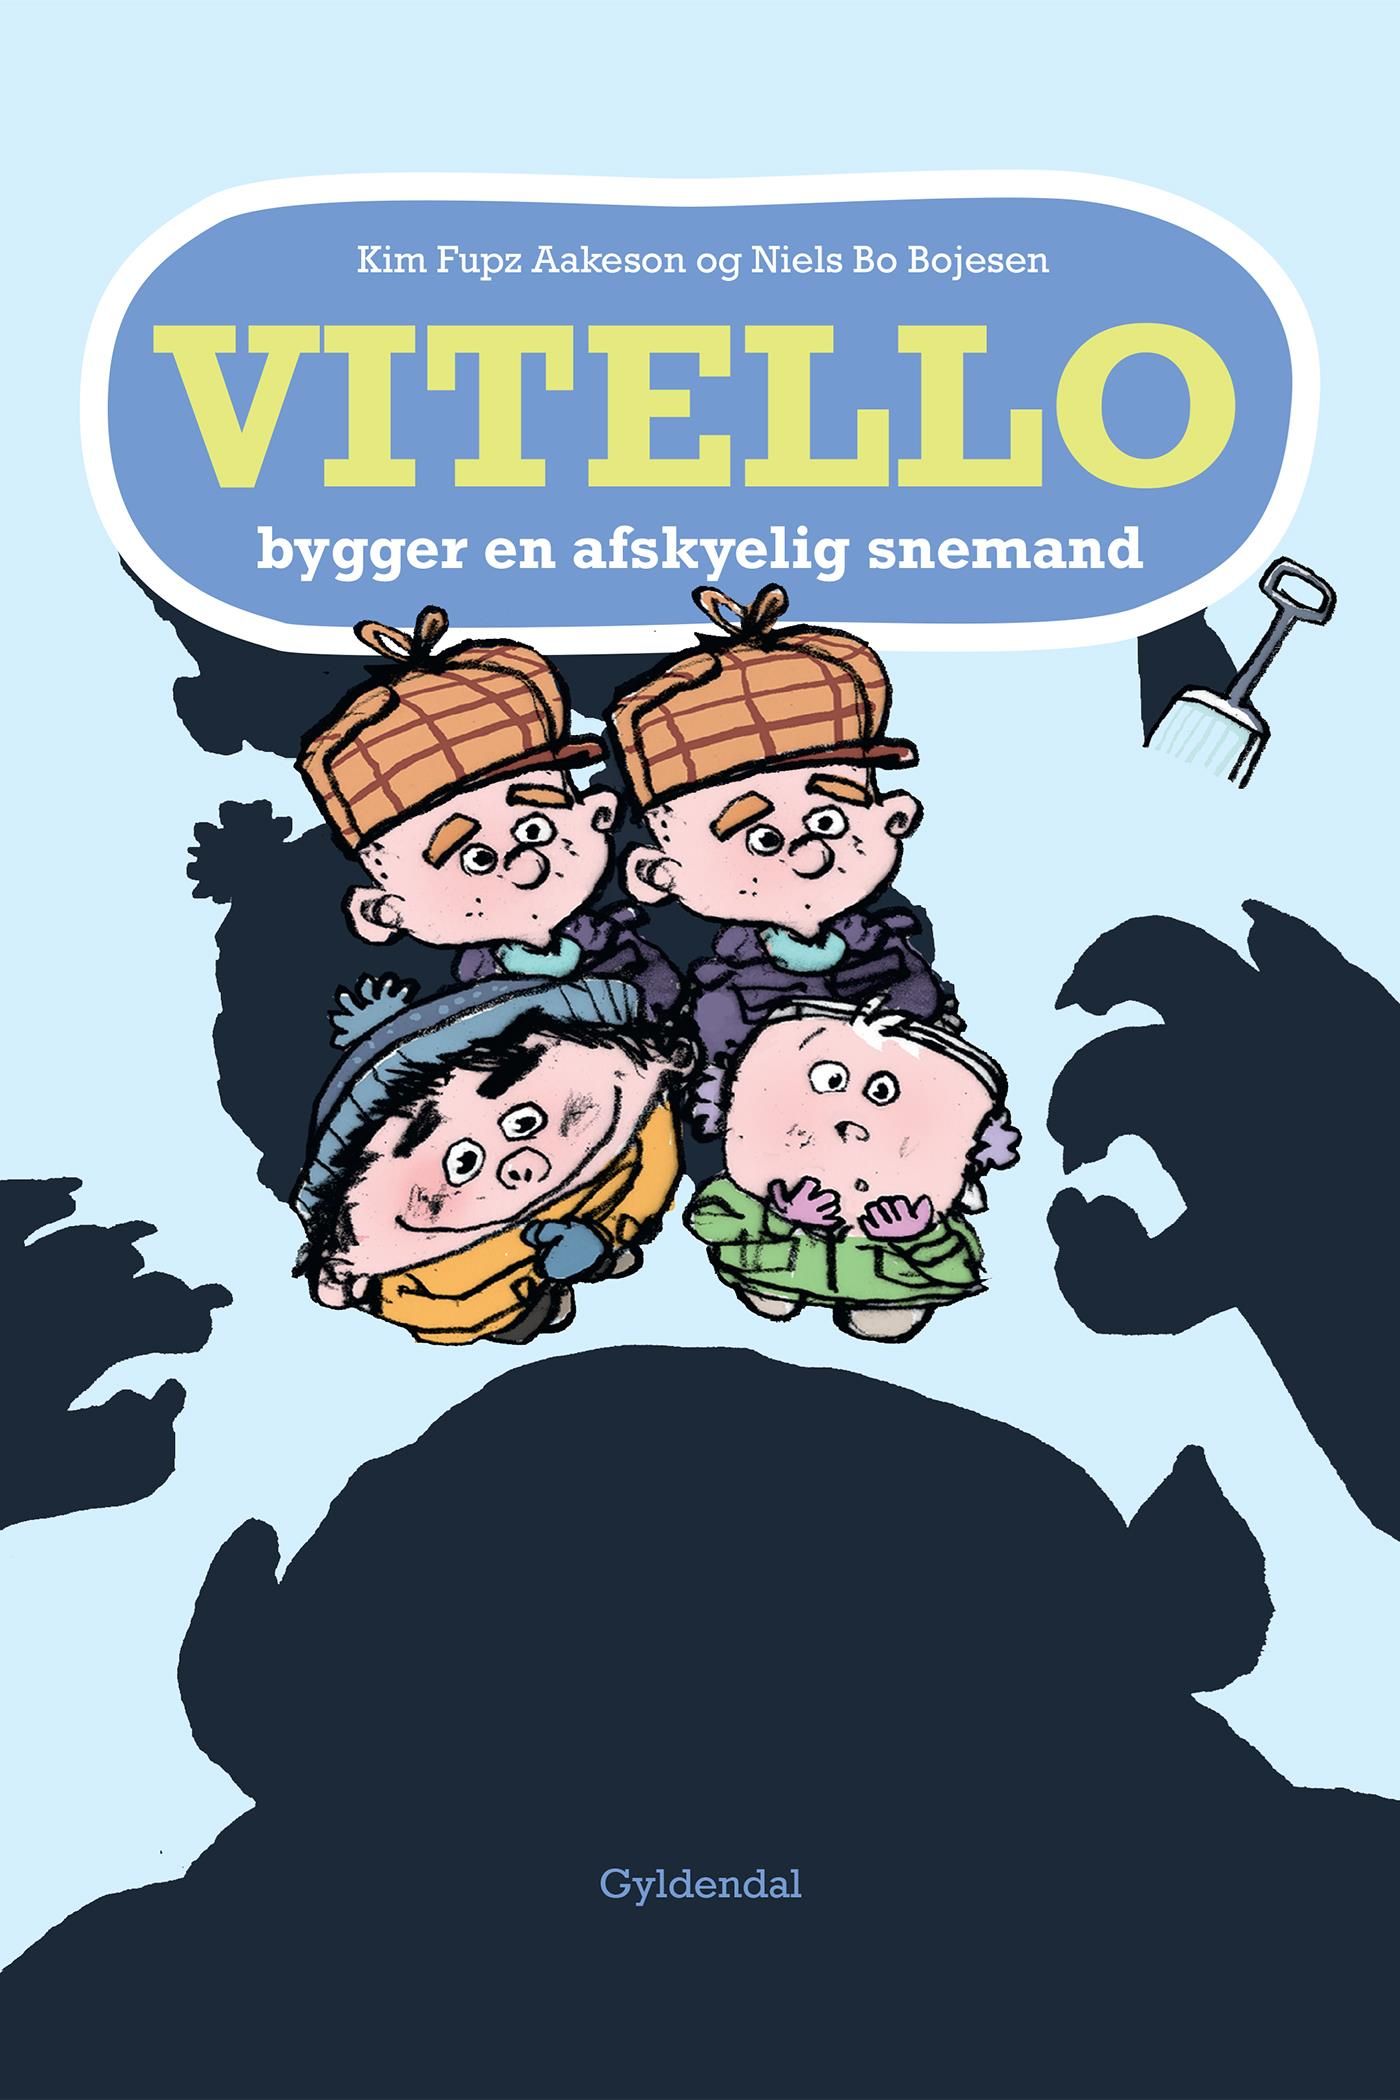 Vitello bygger en afskyelig snemand - Lyt&læs, eBook by Niels Bo Bojesen, Kim Fupz Aakeson